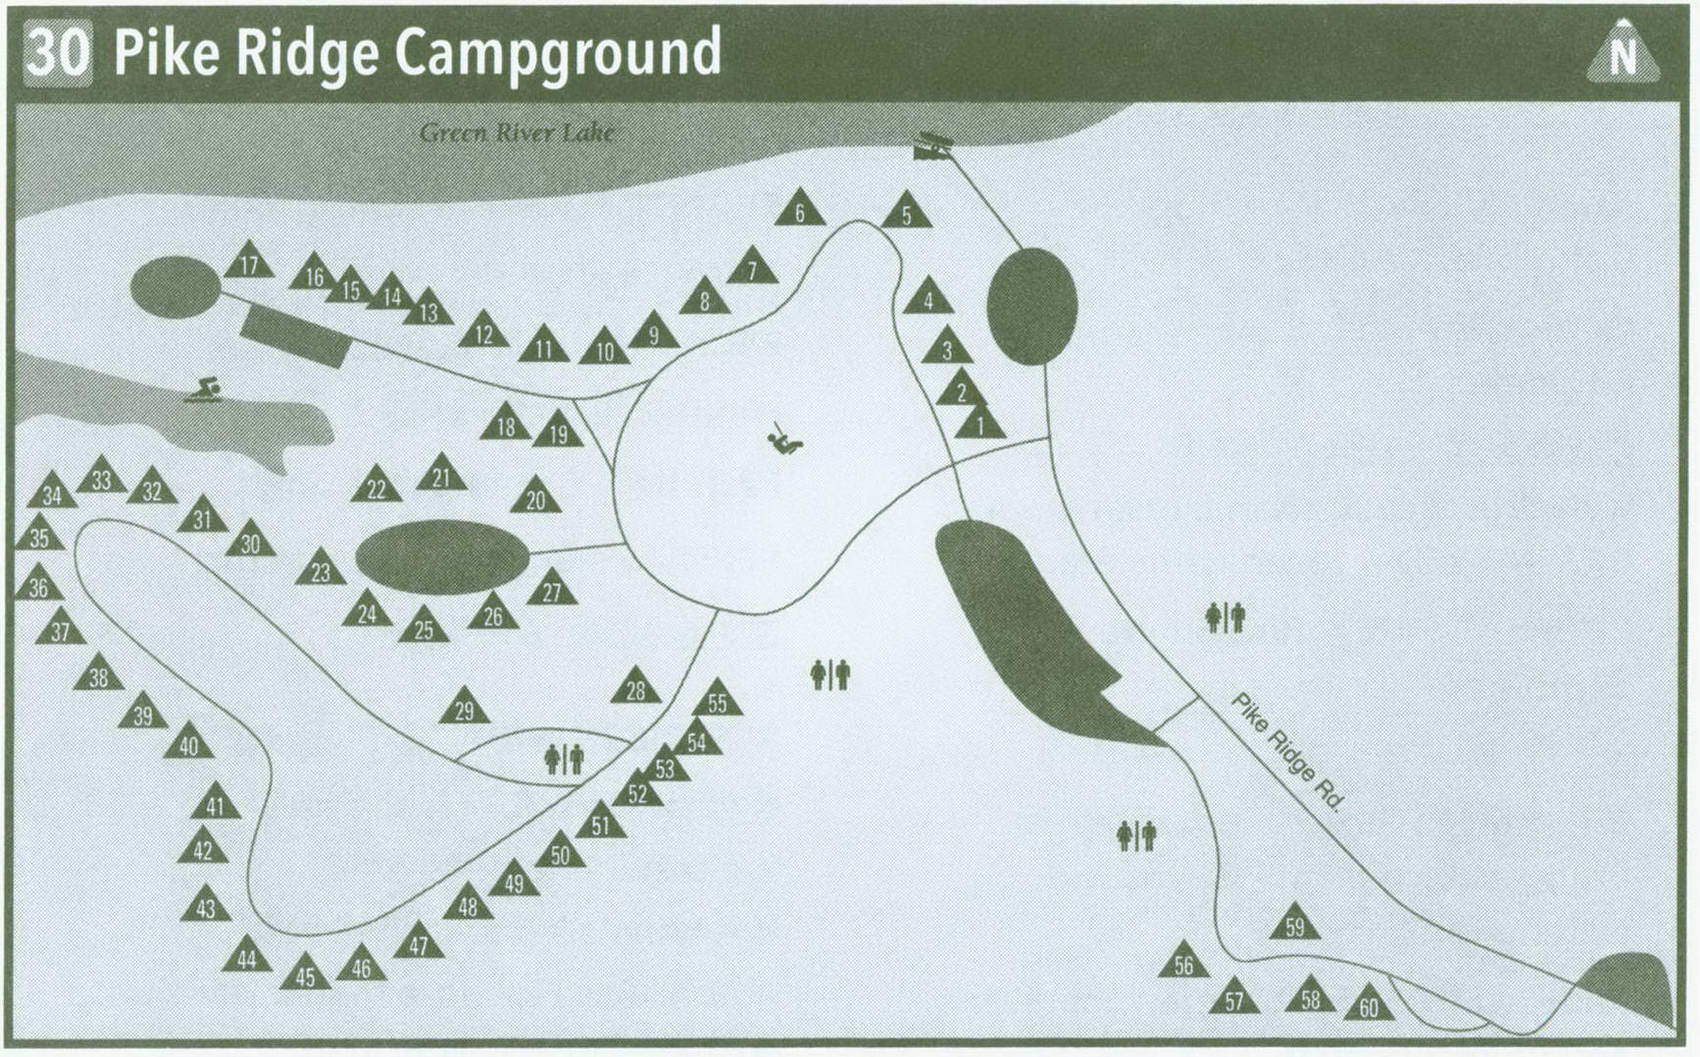 Plan of Pike Ridge Campground